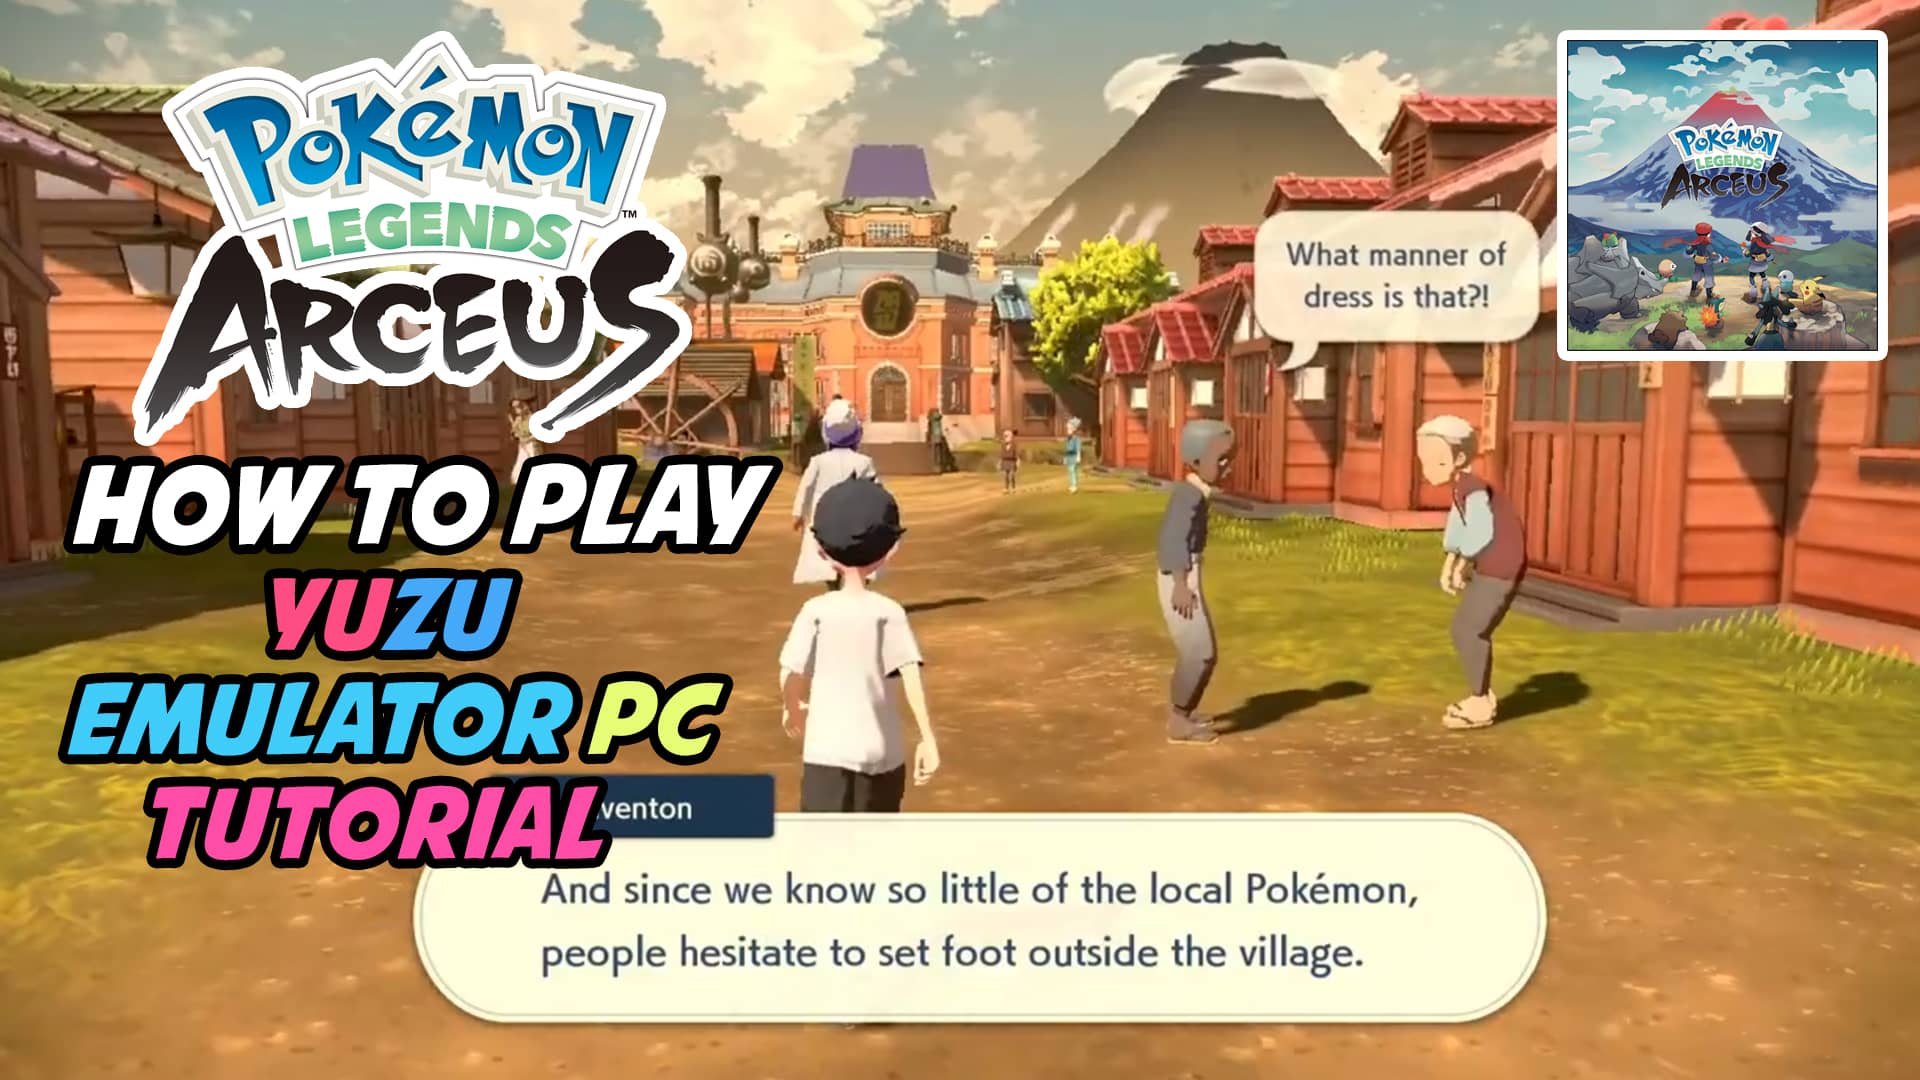 How to Play Pokémon Legends Arceus on PC Using Yuzu Emulator on Vimeo